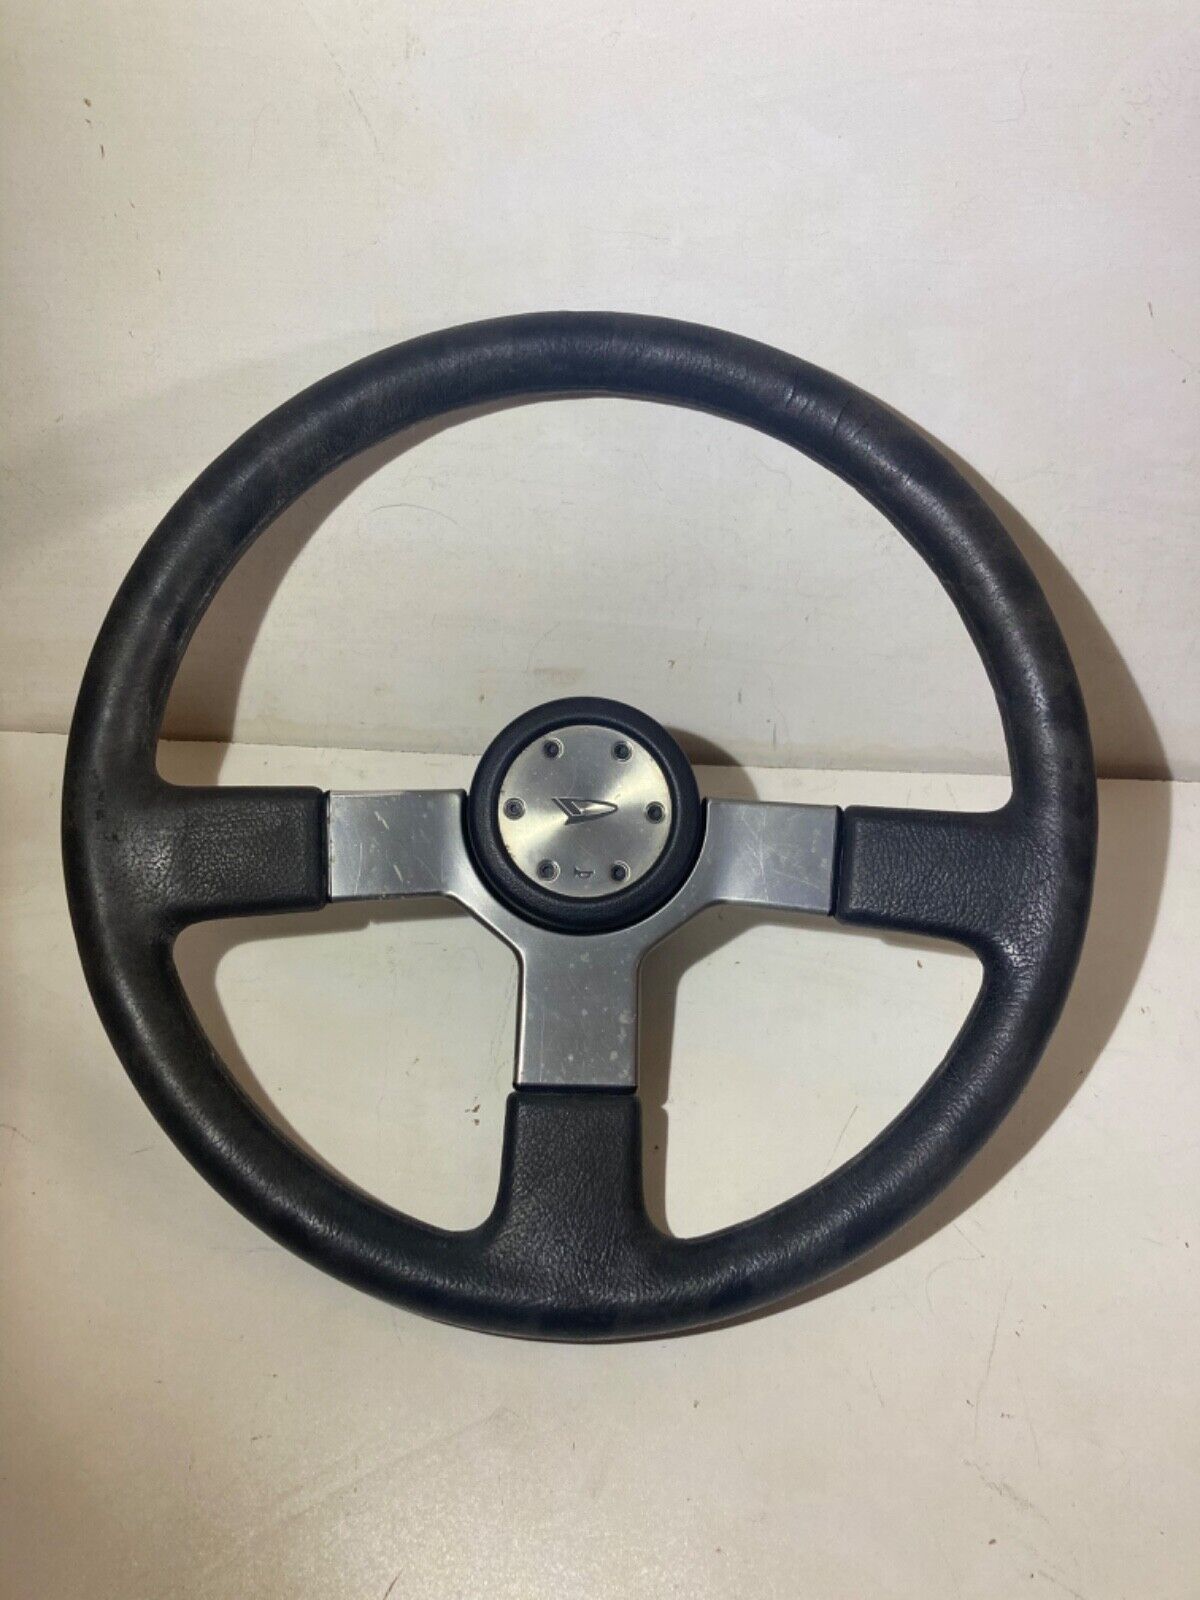 3 Spoke Steering wheel Daihatsu CHARADE G11 TURBO JDM ОЕМ 1983-87